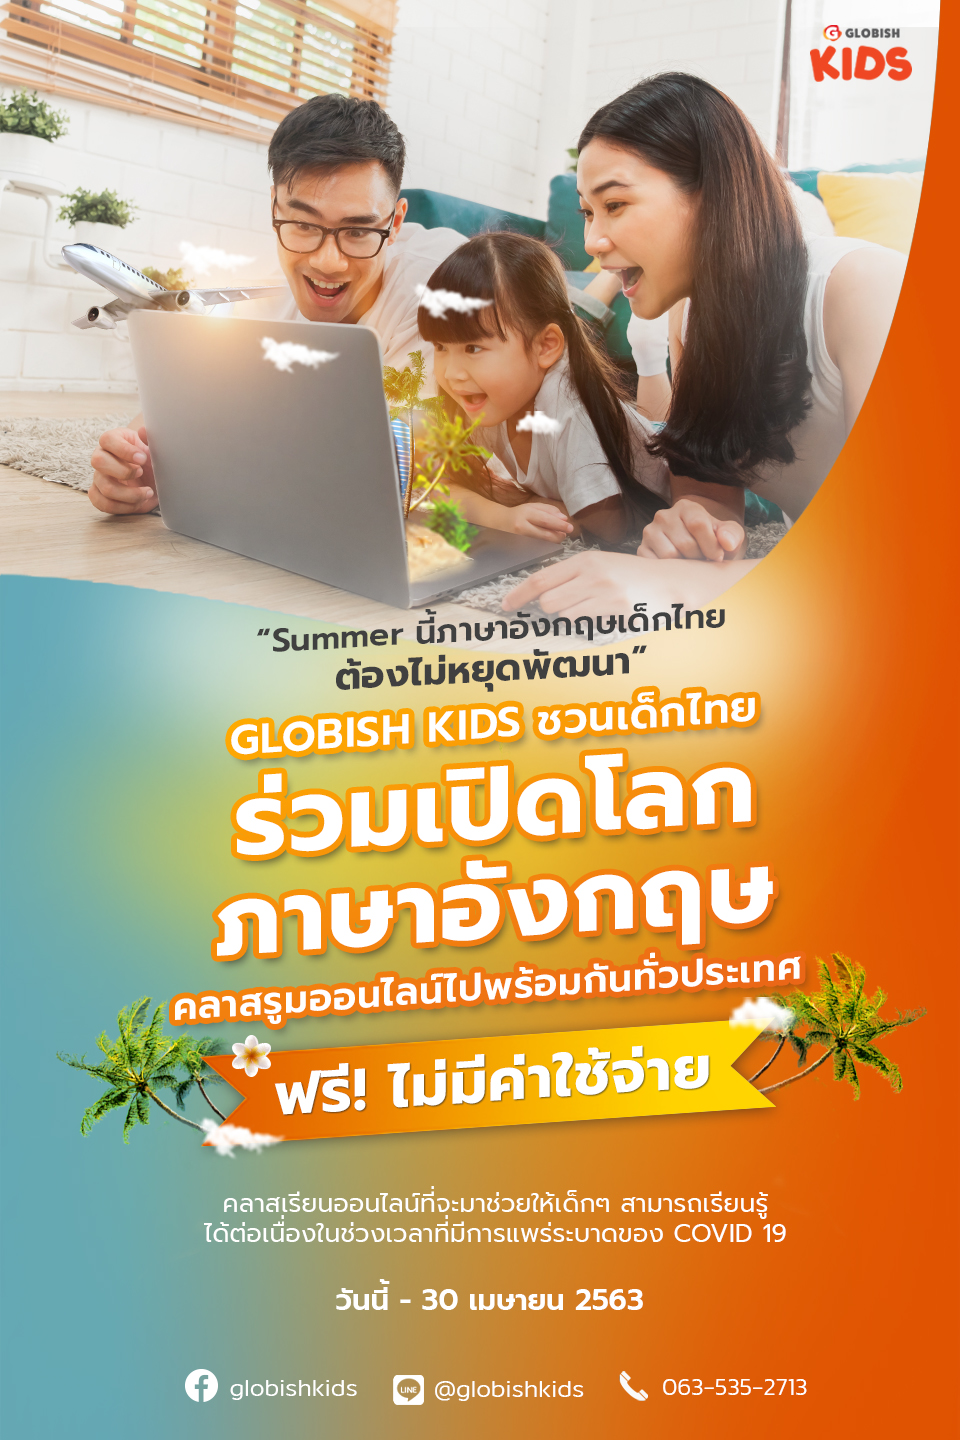 Globish Photo 4 | GLOBISH เปิดสอนภาษาอังกฤษให้เด็กไทยฟรีฝ่าวิกฤต Covid-19 ไปด้วยกัน!